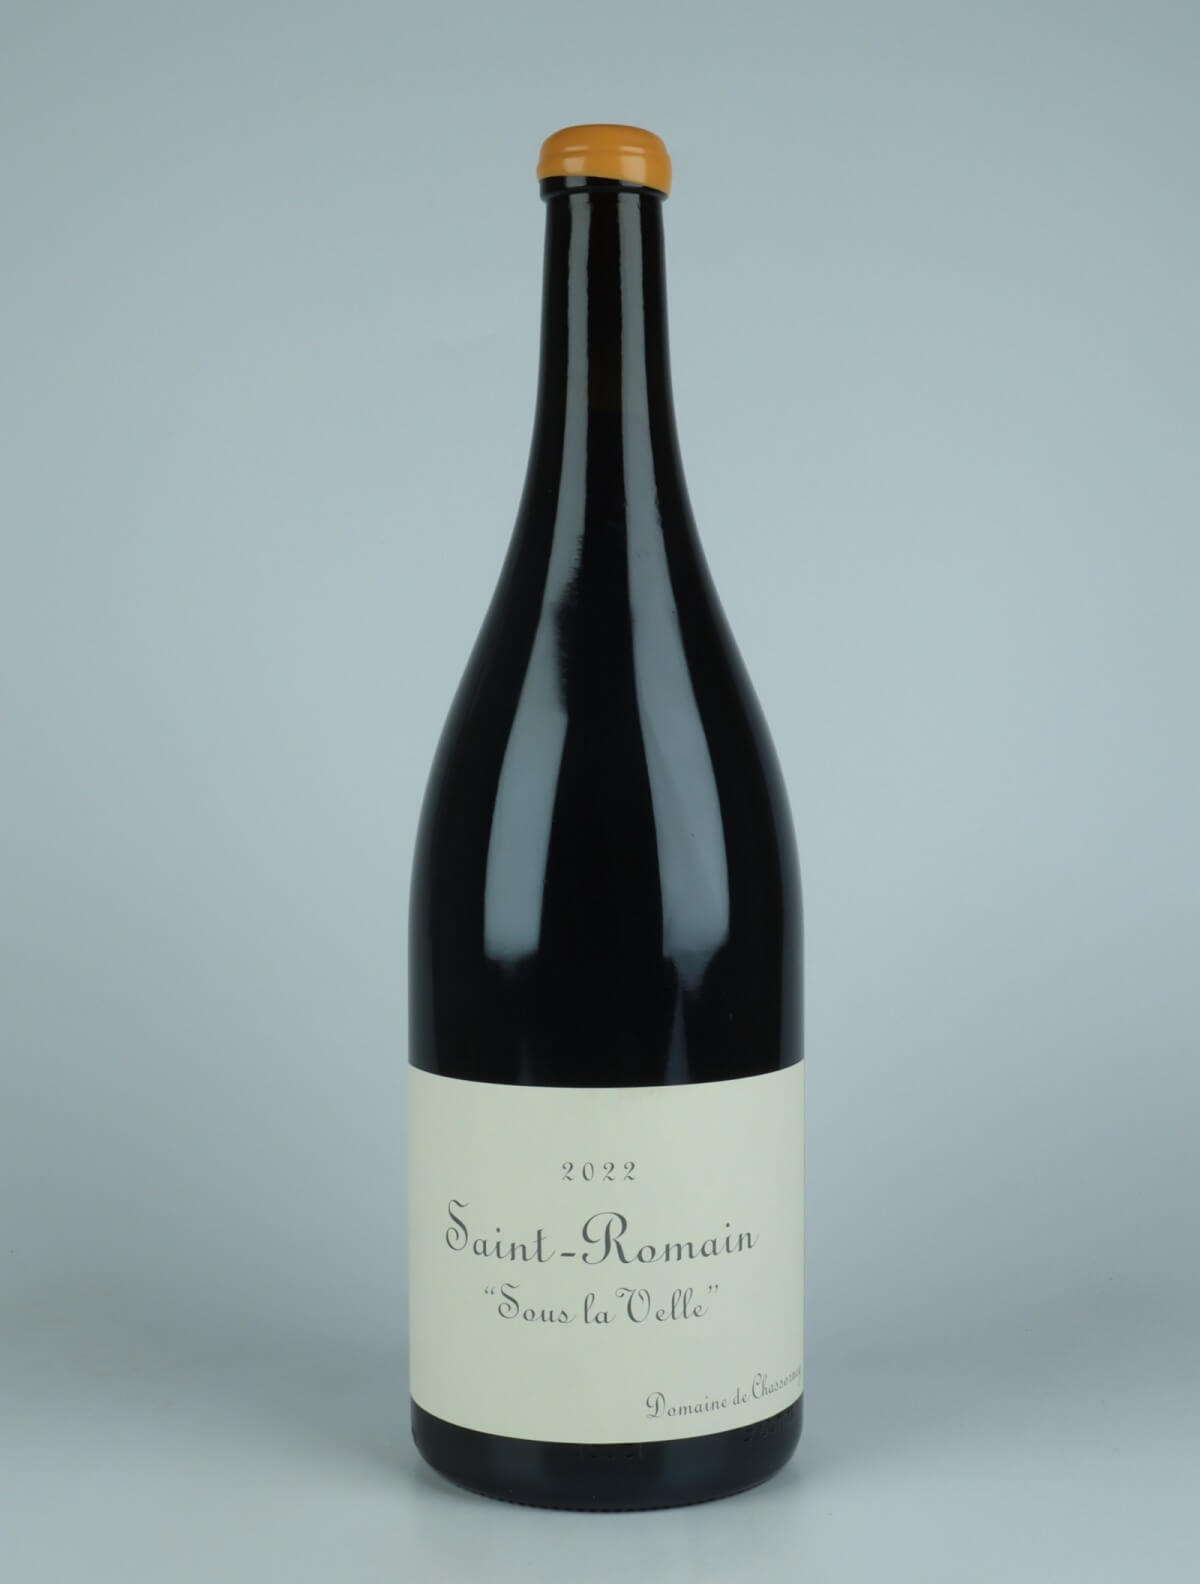 En flaske 2022 Saint Romain Rouge - Sous la Velle Rødvin fra Domaine de Chassorney, Bourgogne i Frankrig